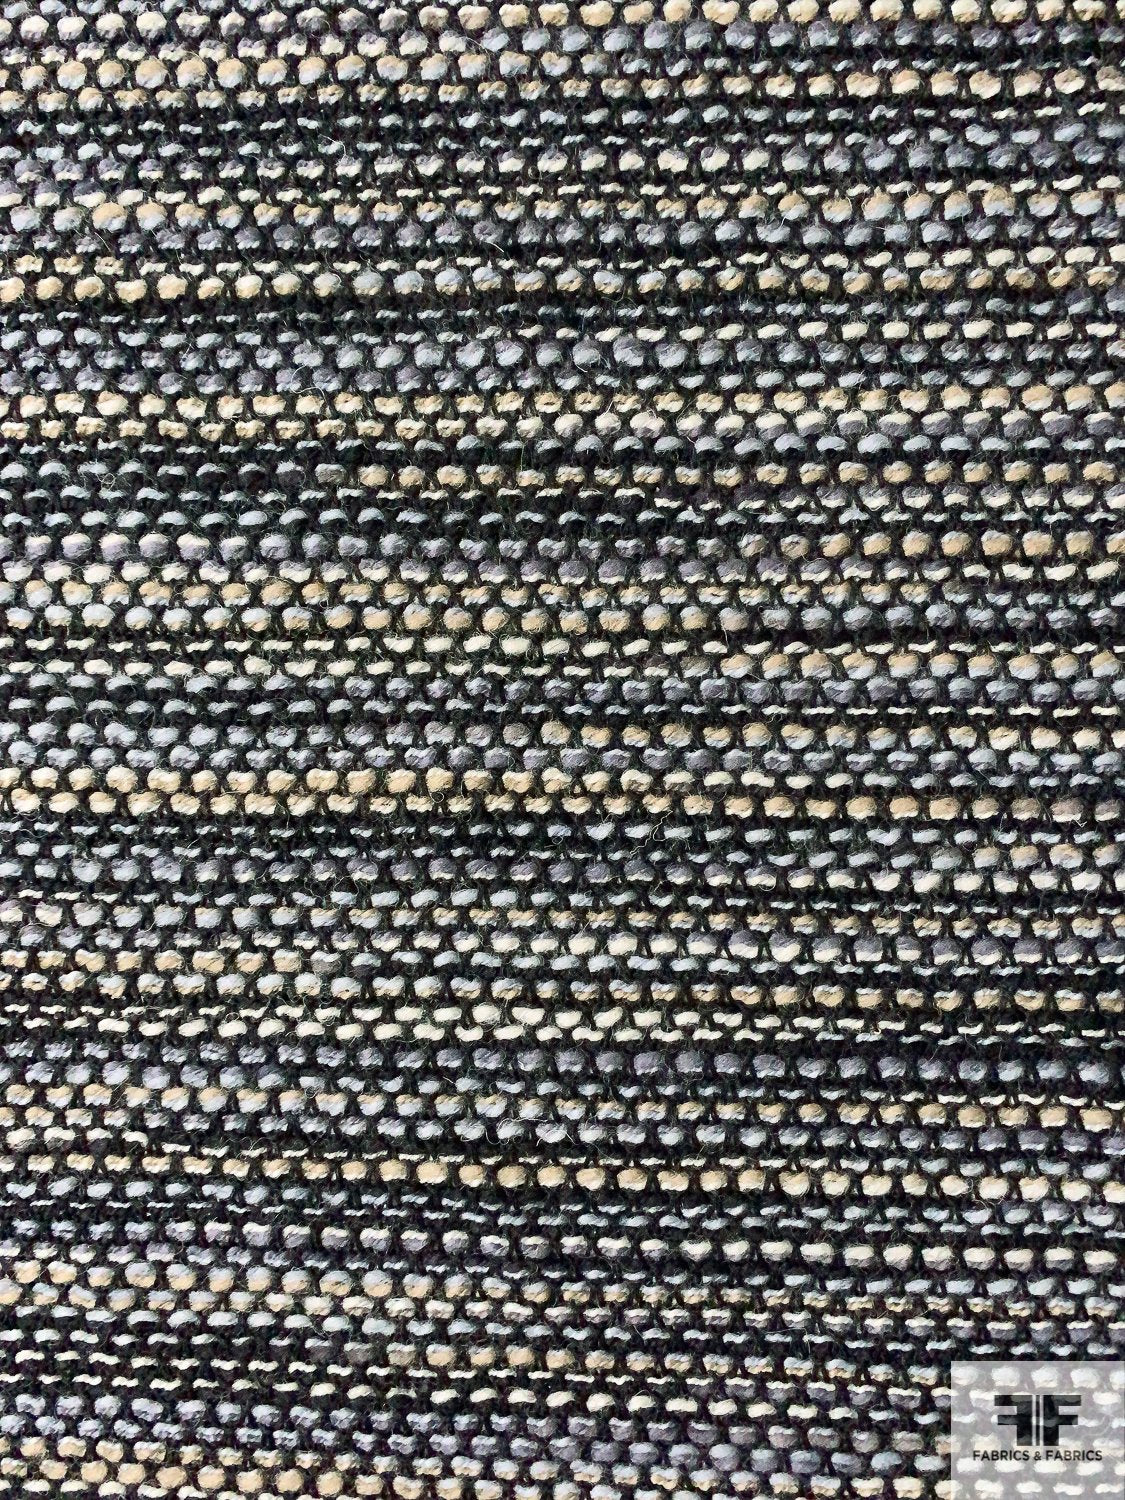 Italian Loosely Yarn Woven Wool Tweed Suiting - Shades of Grey / Navy / Black / Beige